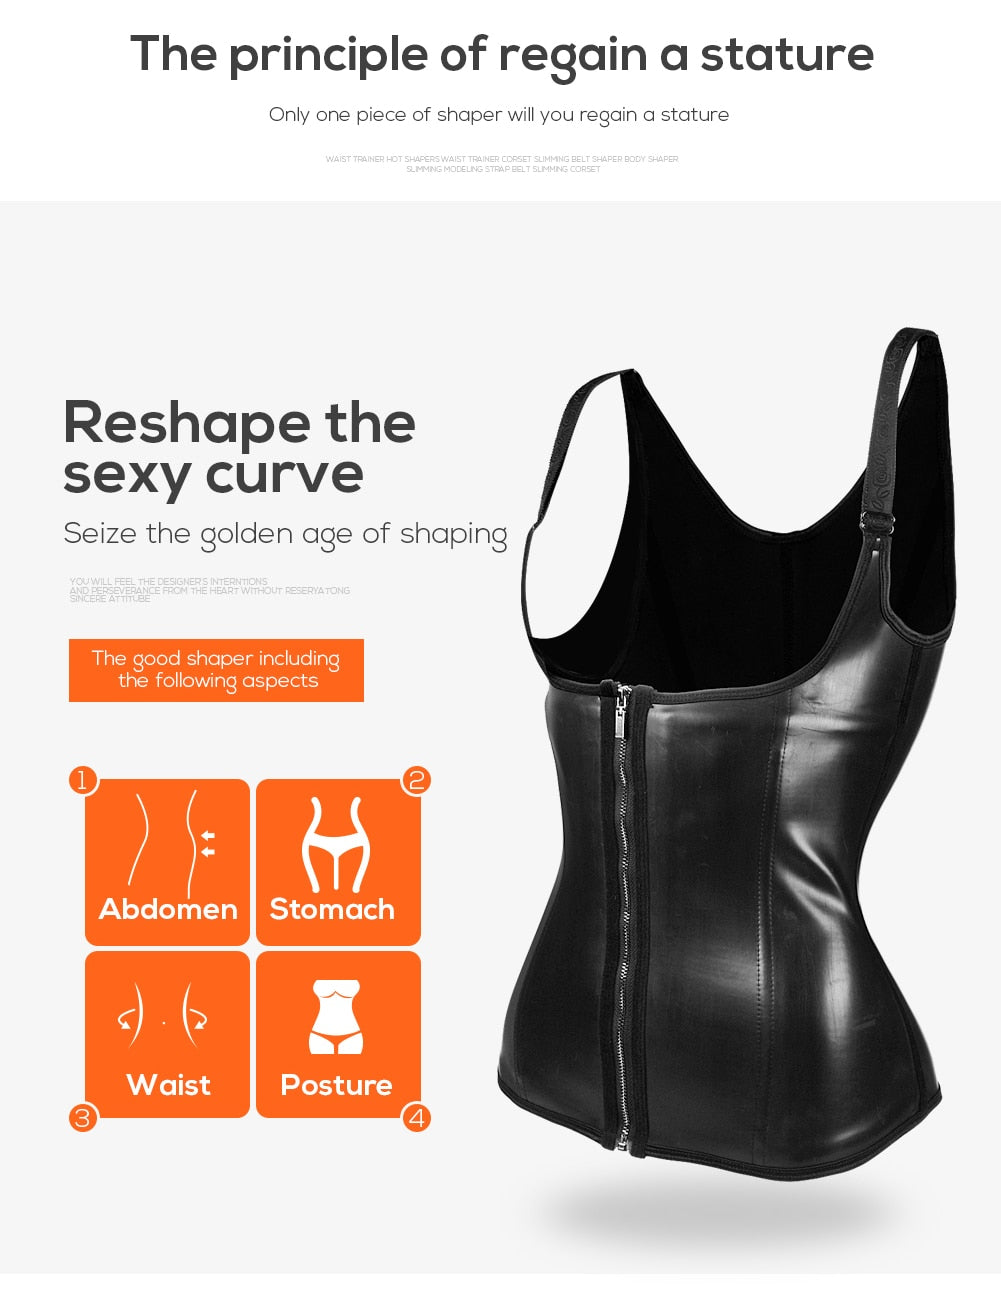 Waist Trainer Corsets Latex gaine ventre Steel slimming underwear body Shaper women Bustiers colombian girdles Modeling Strap